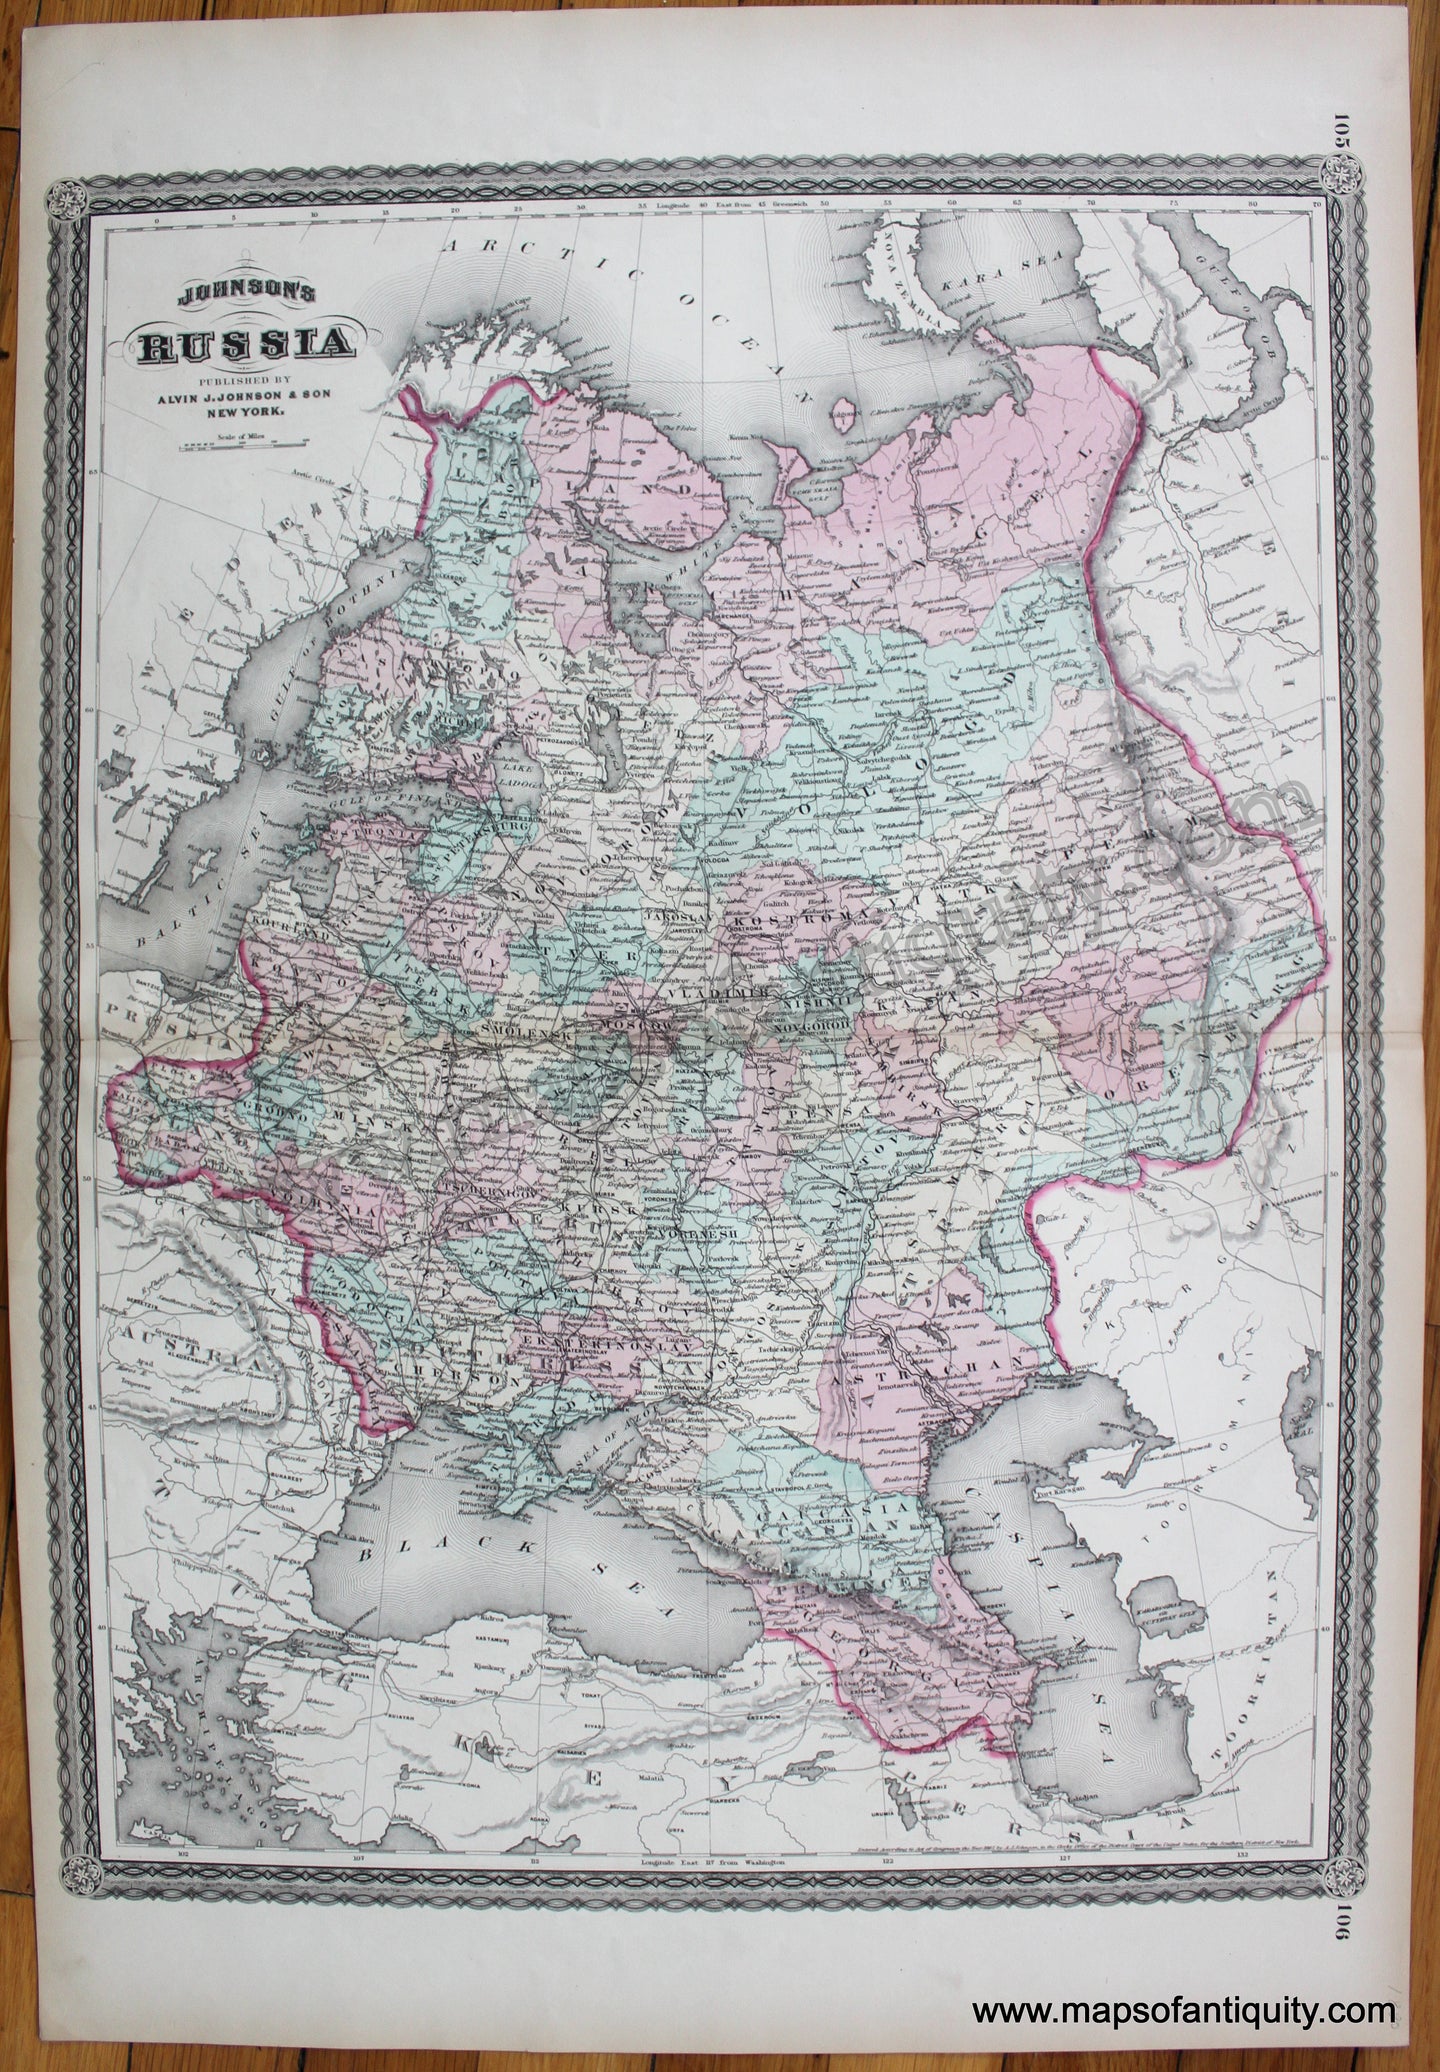 Antique-Hand-Colored-Map-Johnson's-Russia-1880-Alvin-J.-Johnson-&-Son-Russia-1800s-19th-century-Maps-of-Antiquity